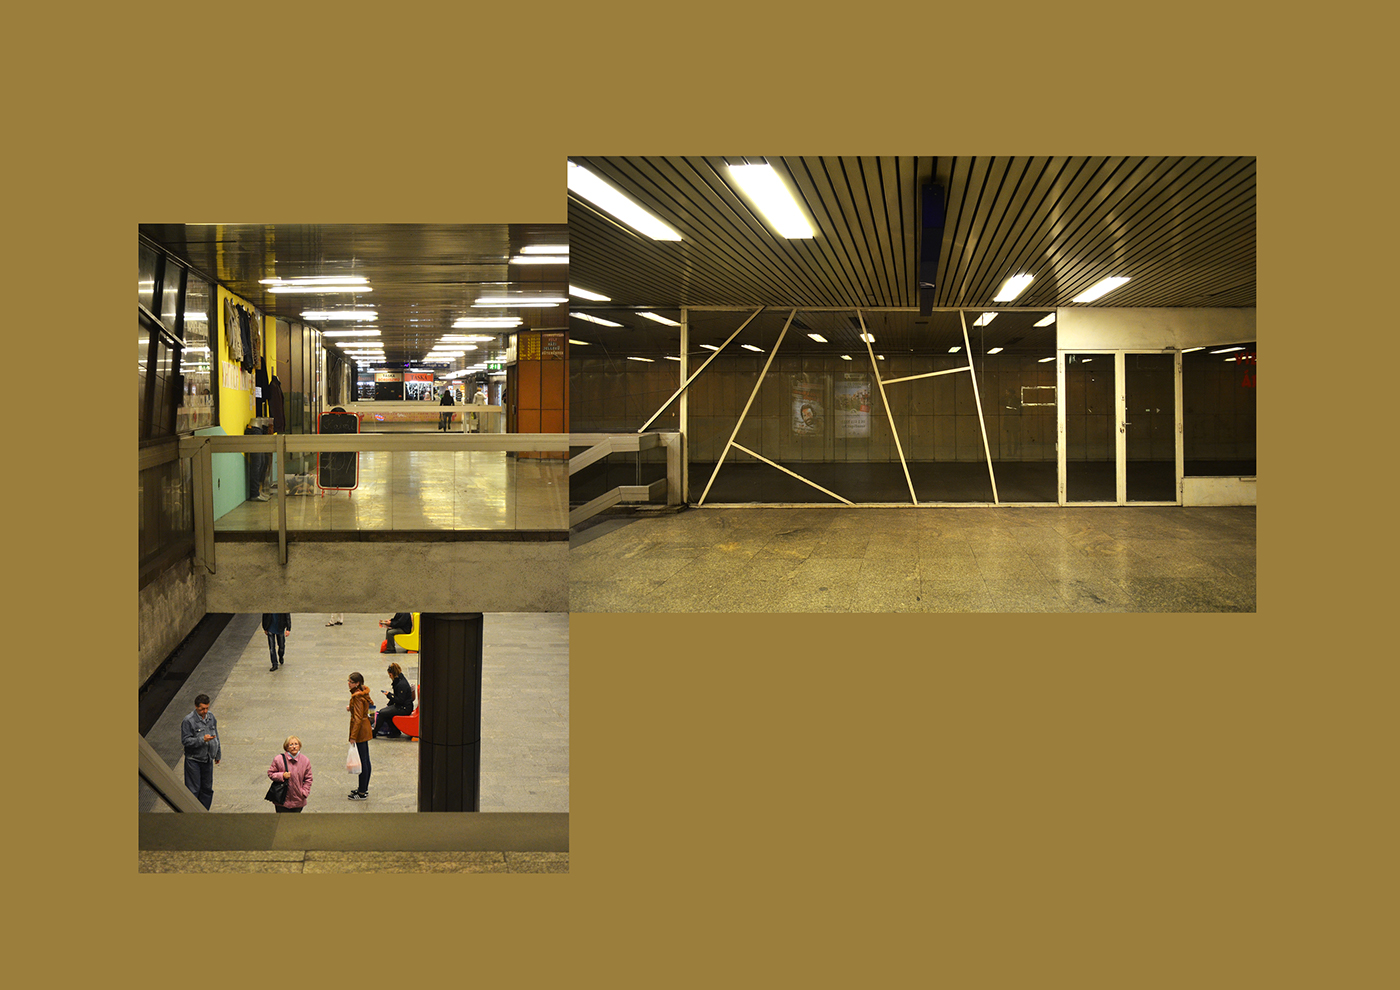 budapest subway socialist realism public spaces Architecture Photography